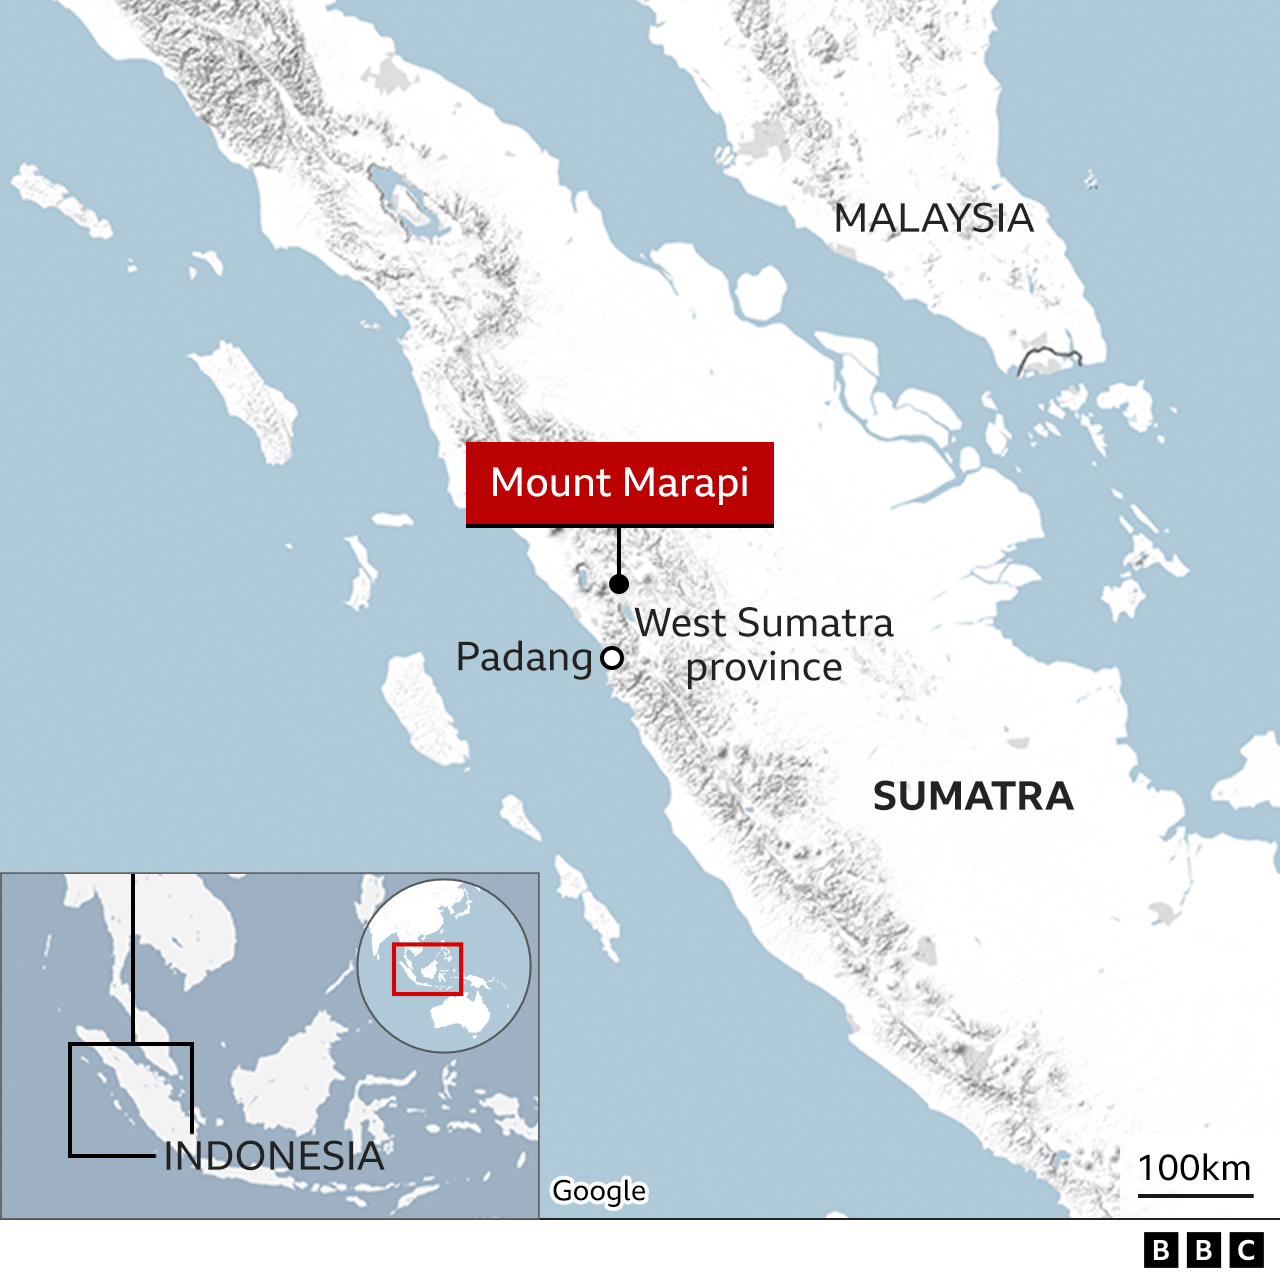 Map showing location of Mount Marapi in Sumatra